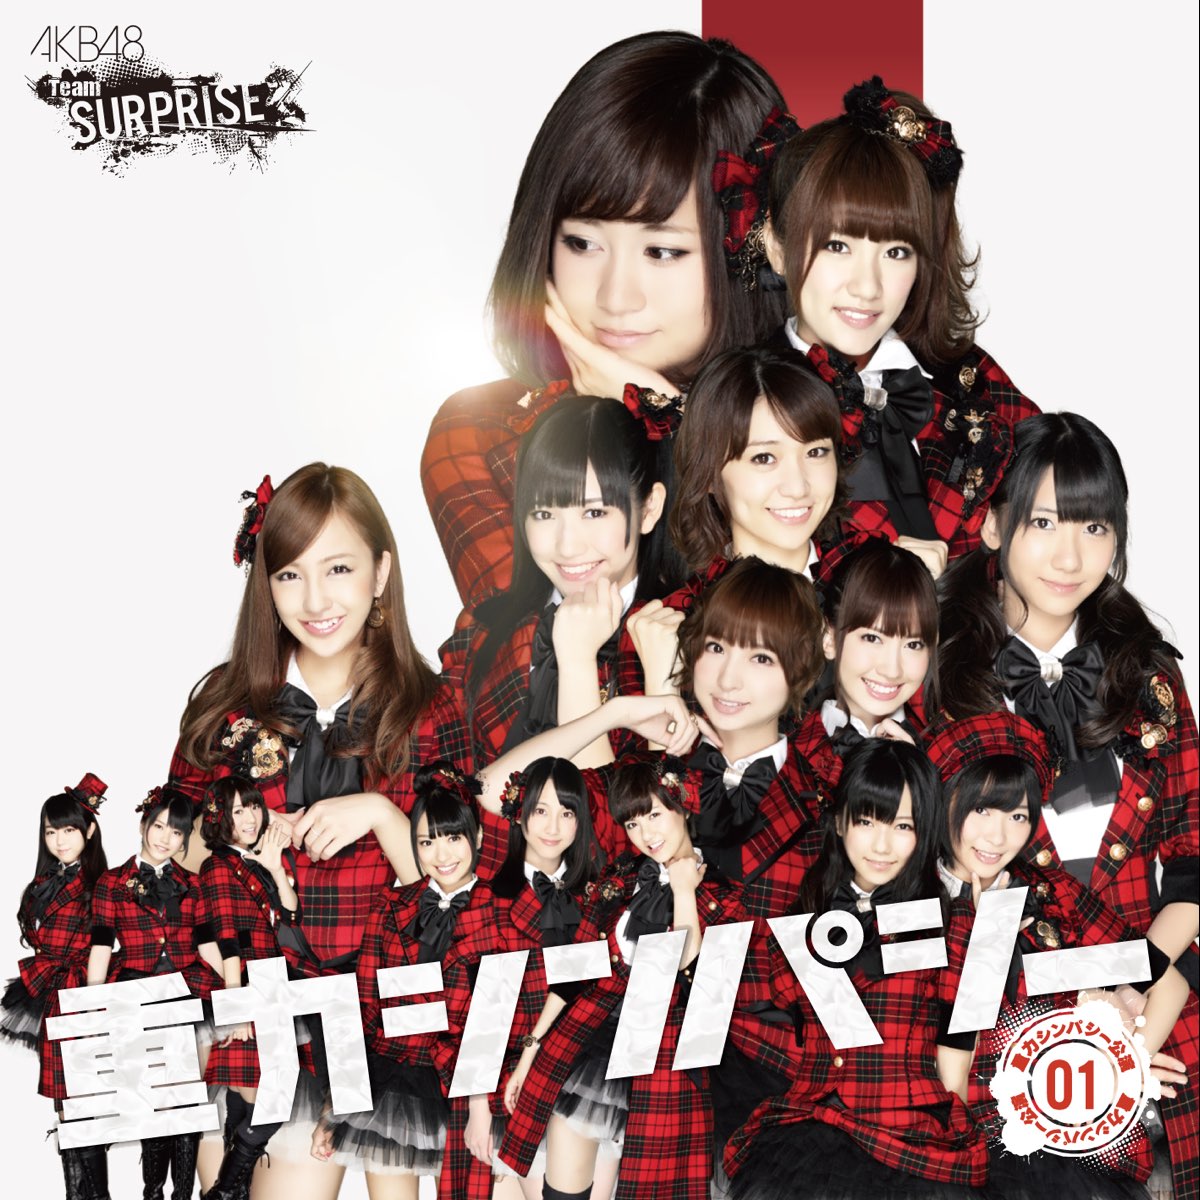 AKB48 Team Surprise 1st Stage cover artwork